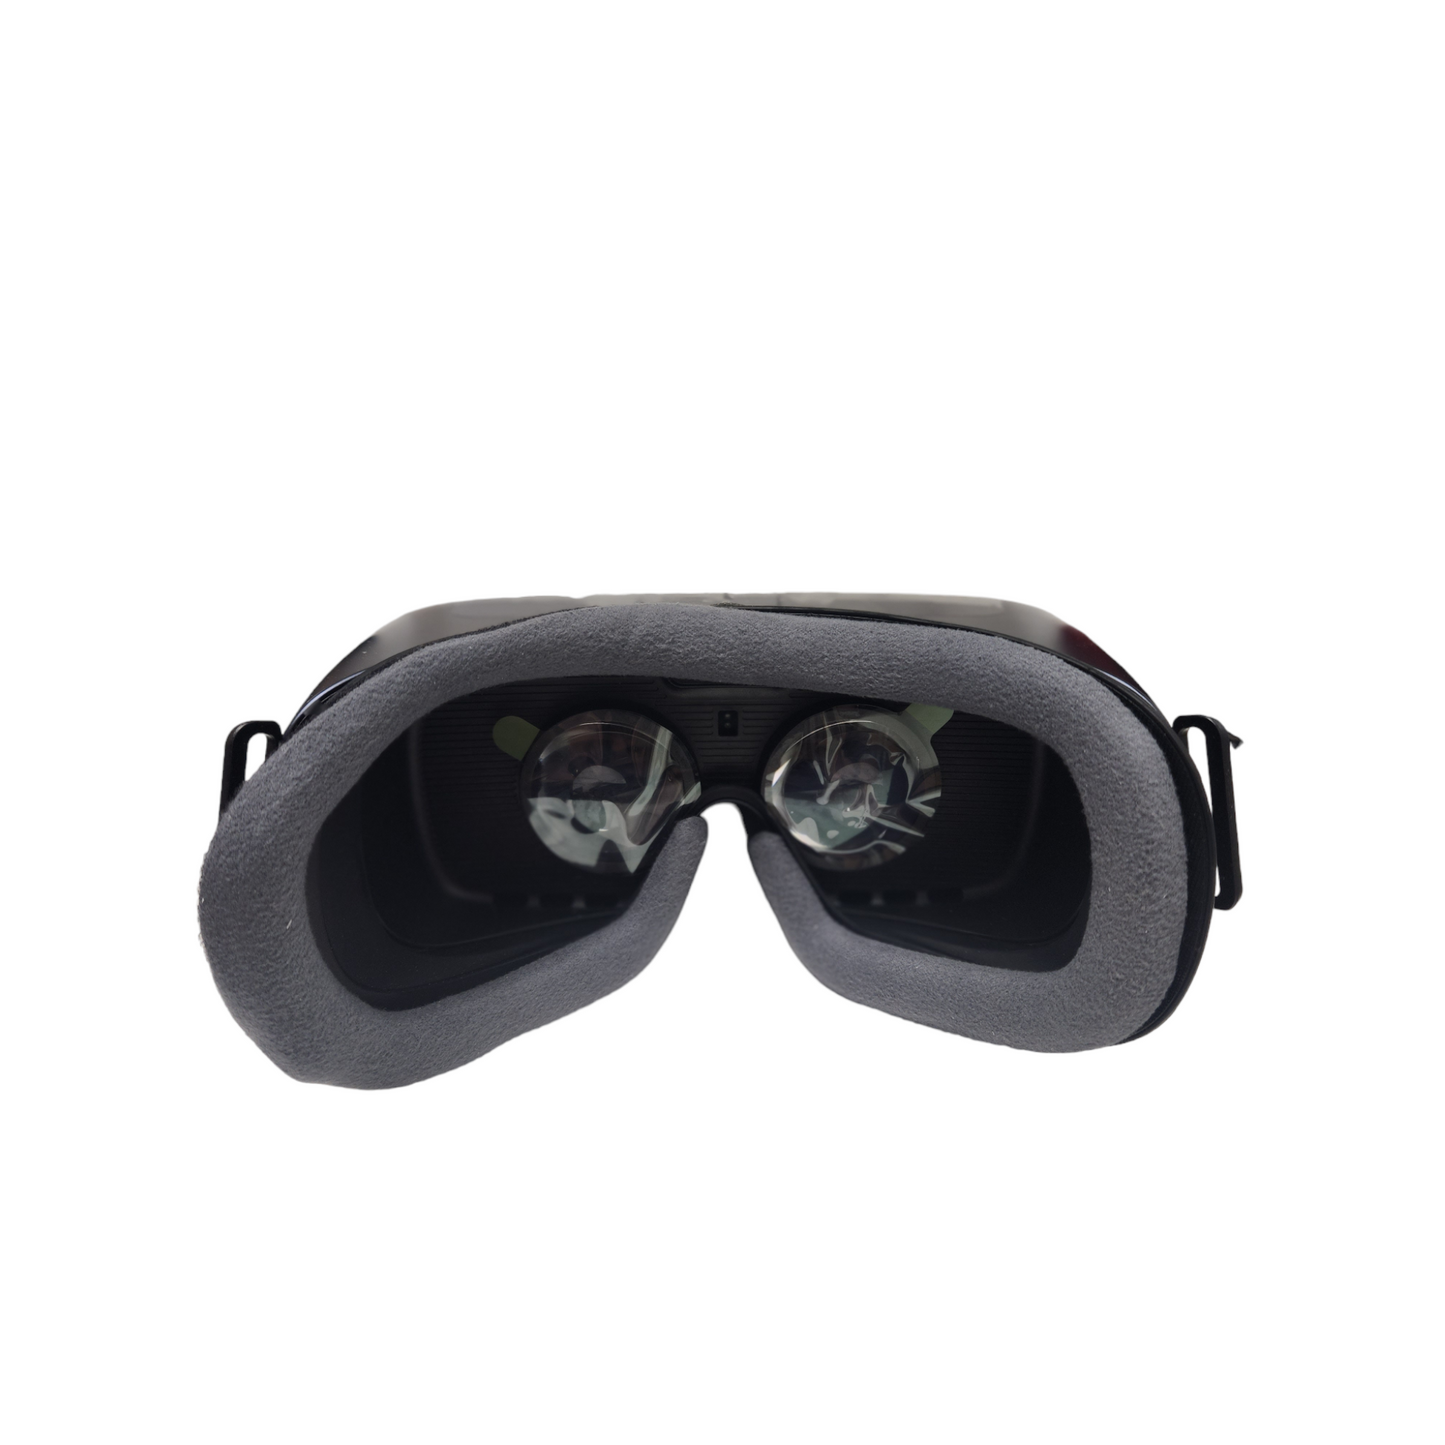 New in Box Samsung Gear VR Oculus